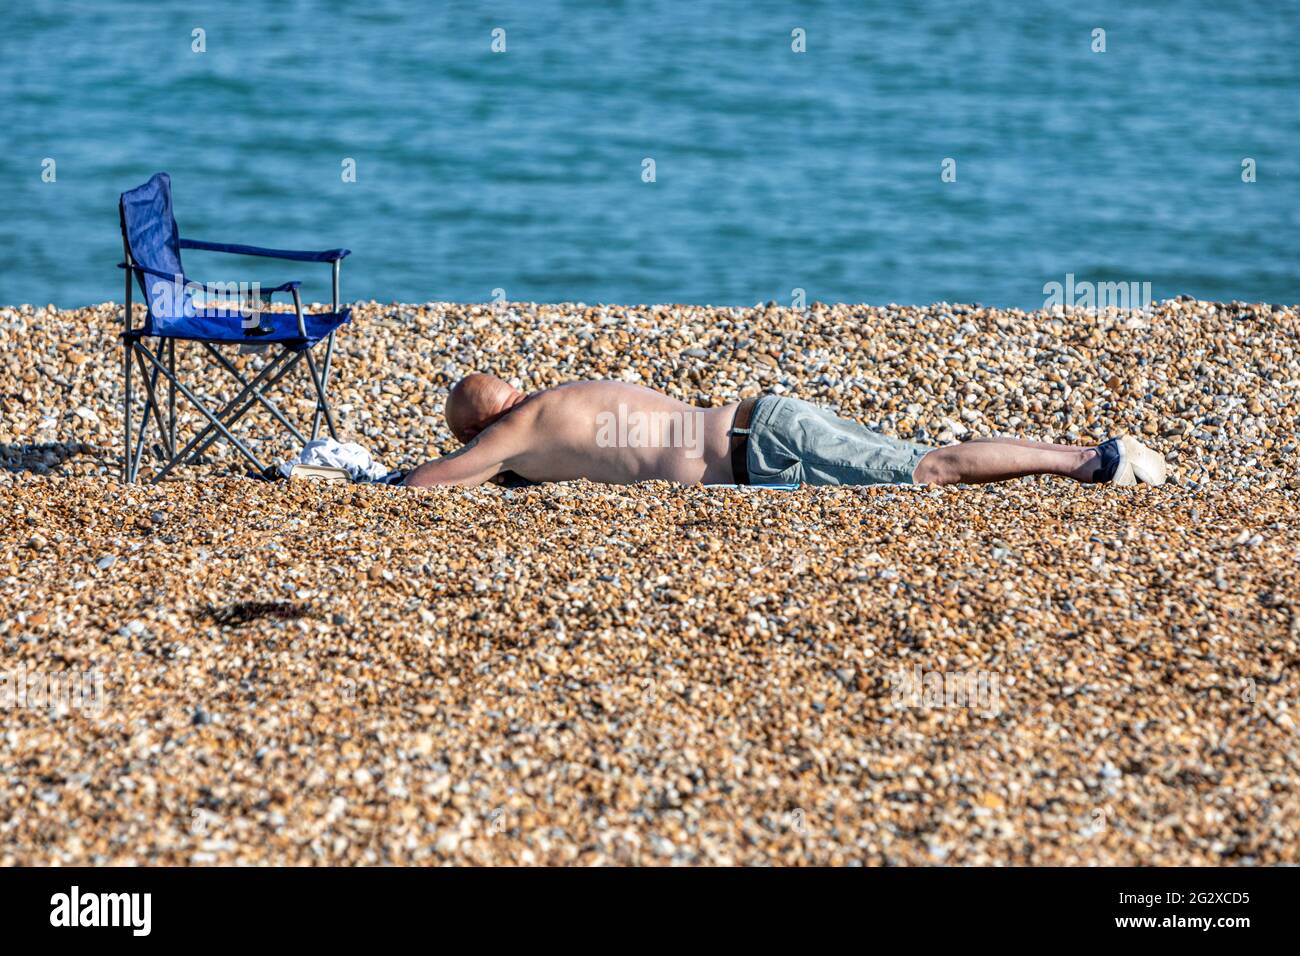 A man sunbathing on a shingle beach with a calm blue sea. Stock Photo